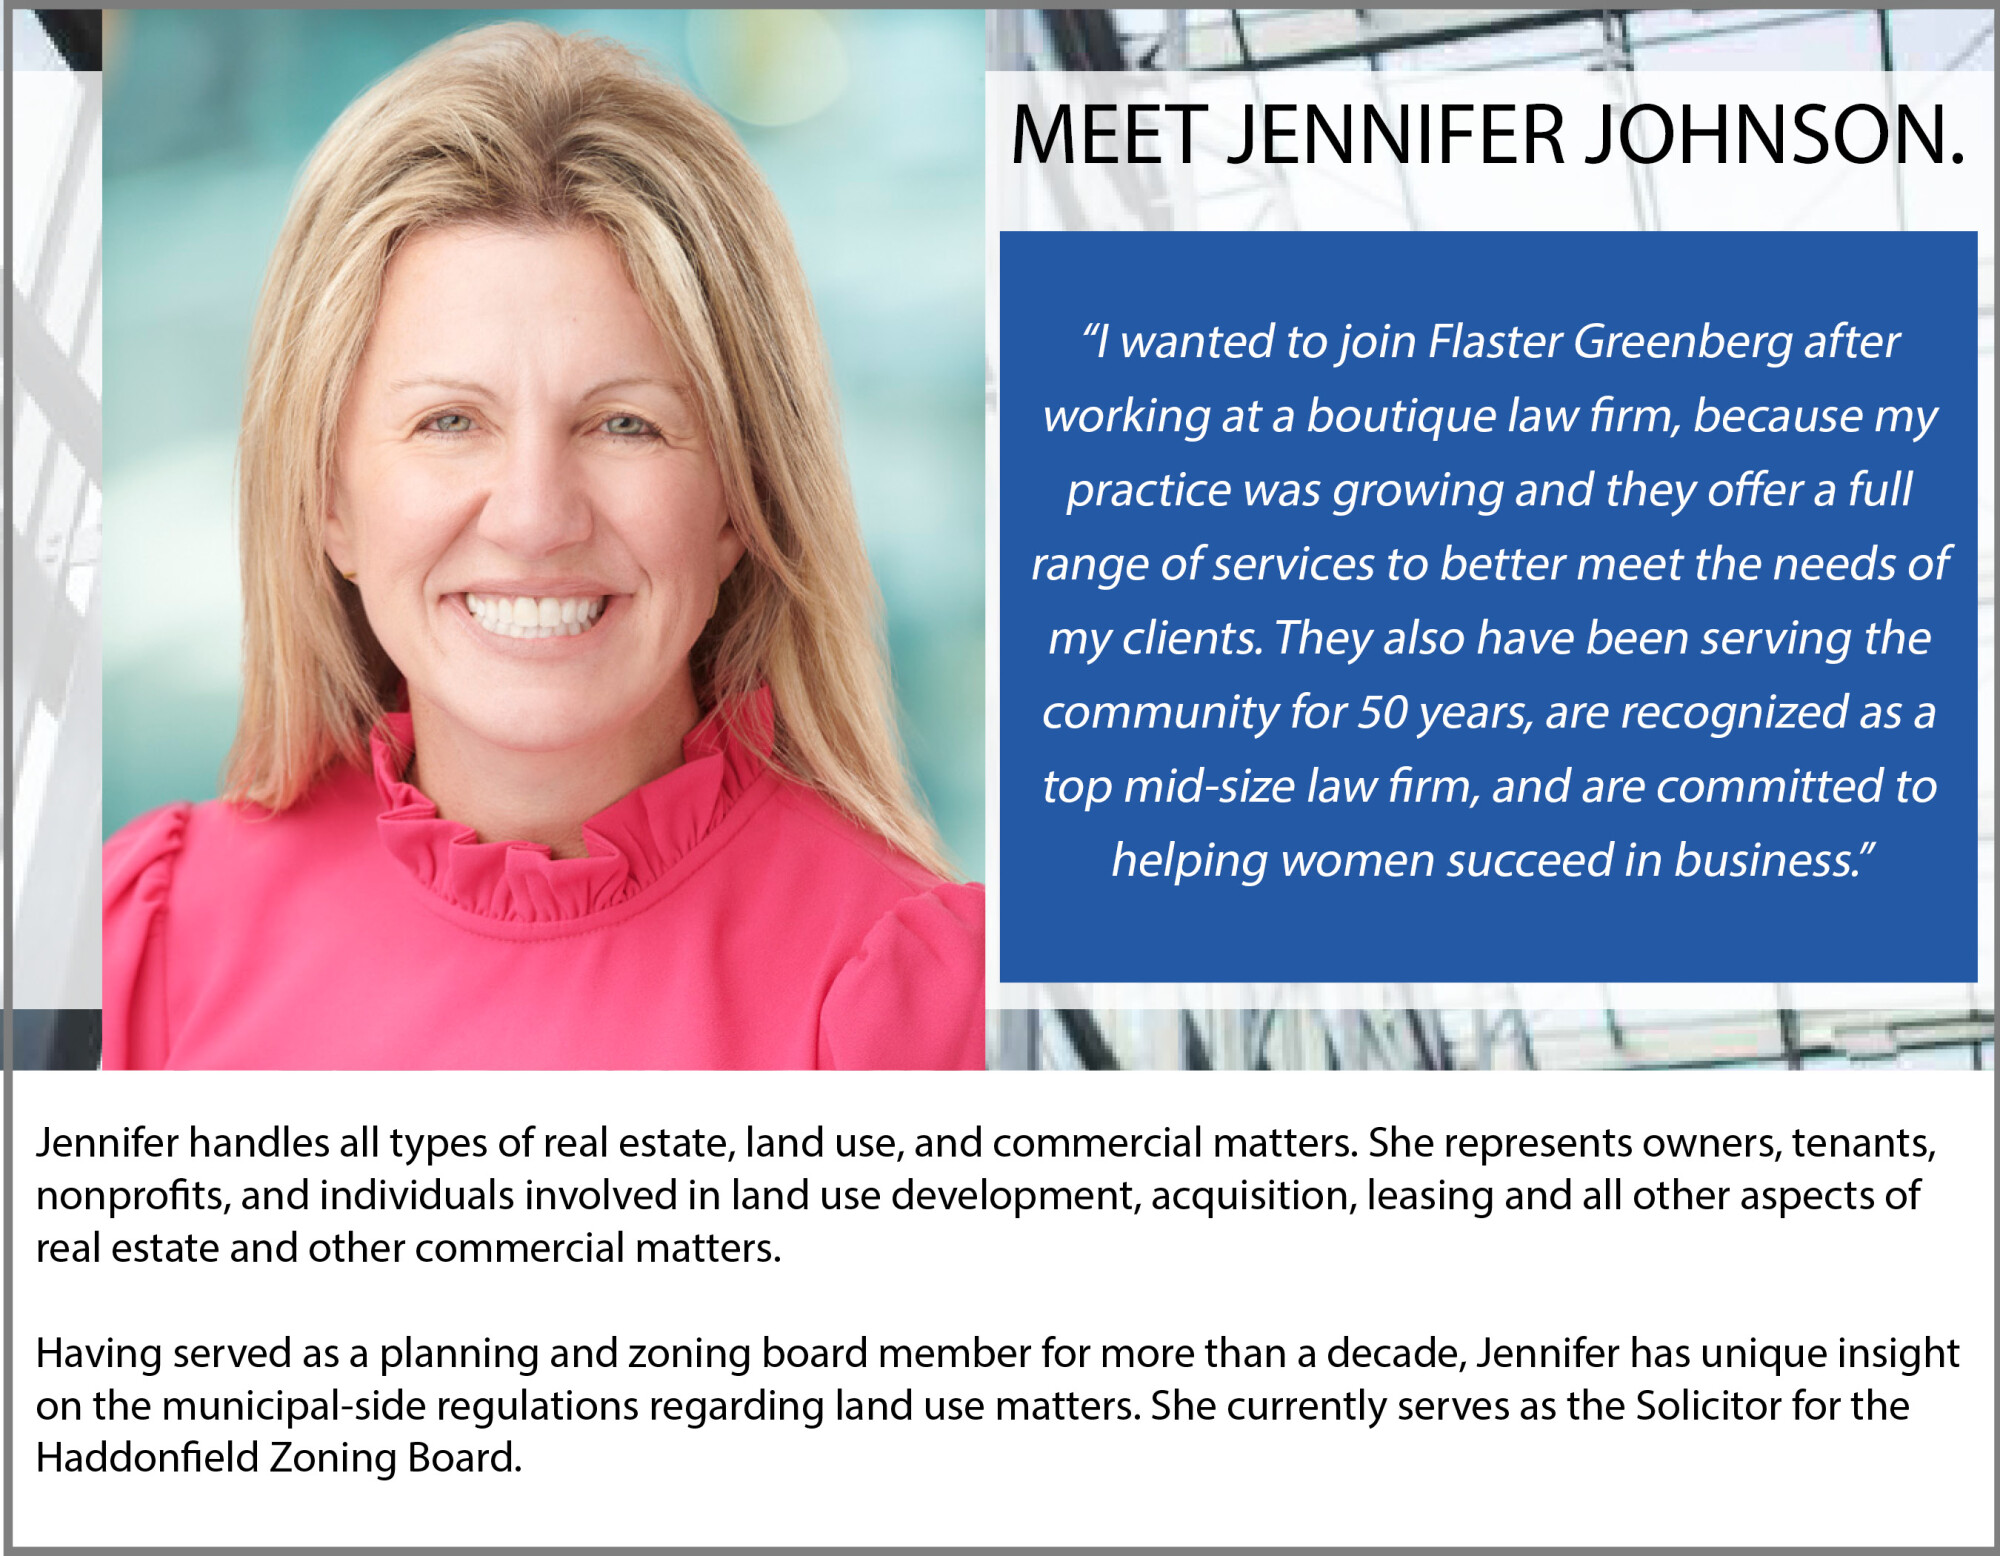 Meet Jennifer Johnson